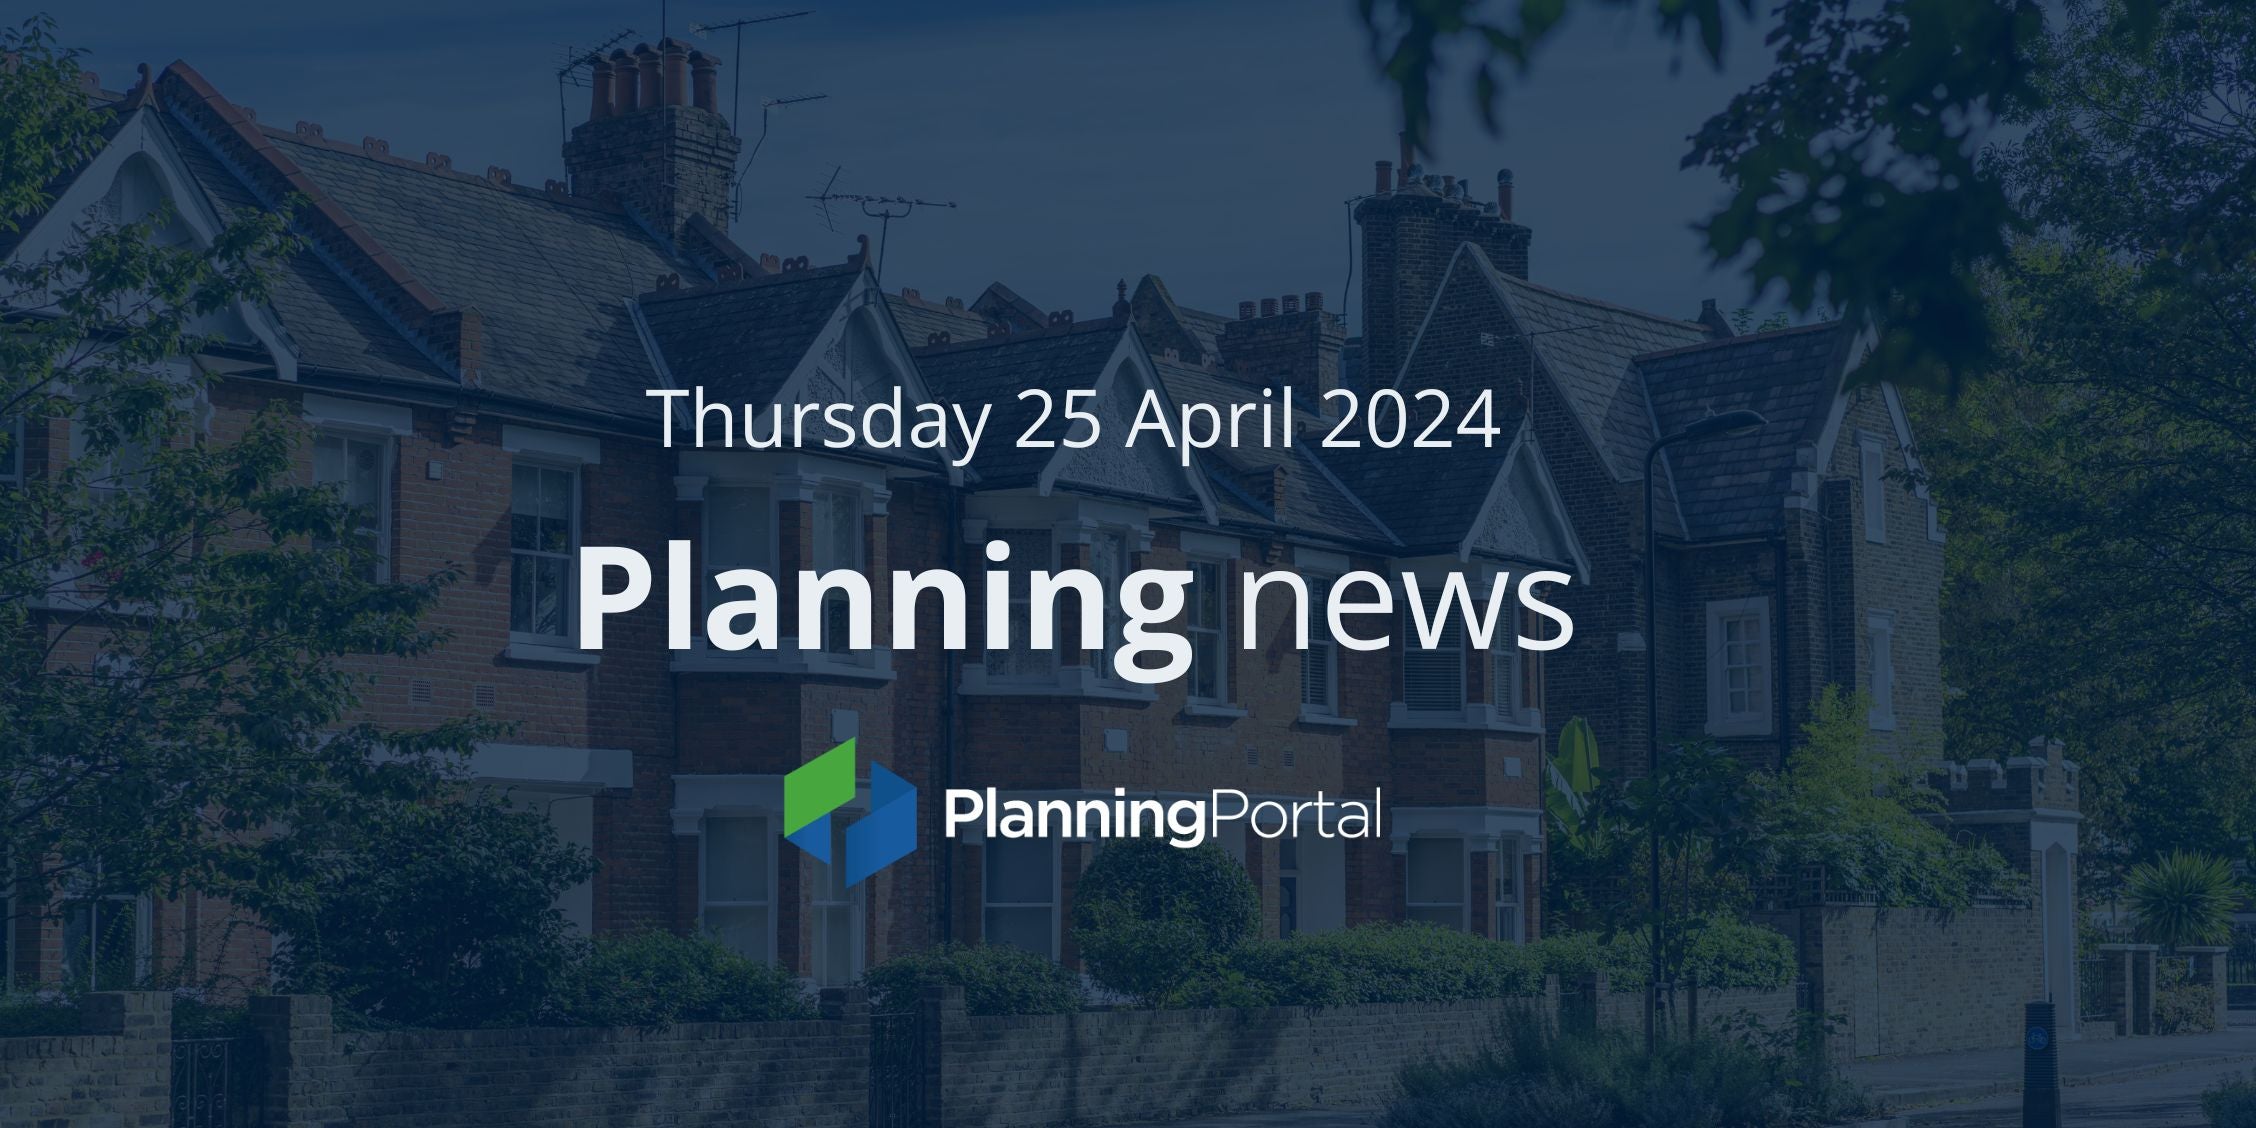 Planning Portal news post header for 25 April 2024